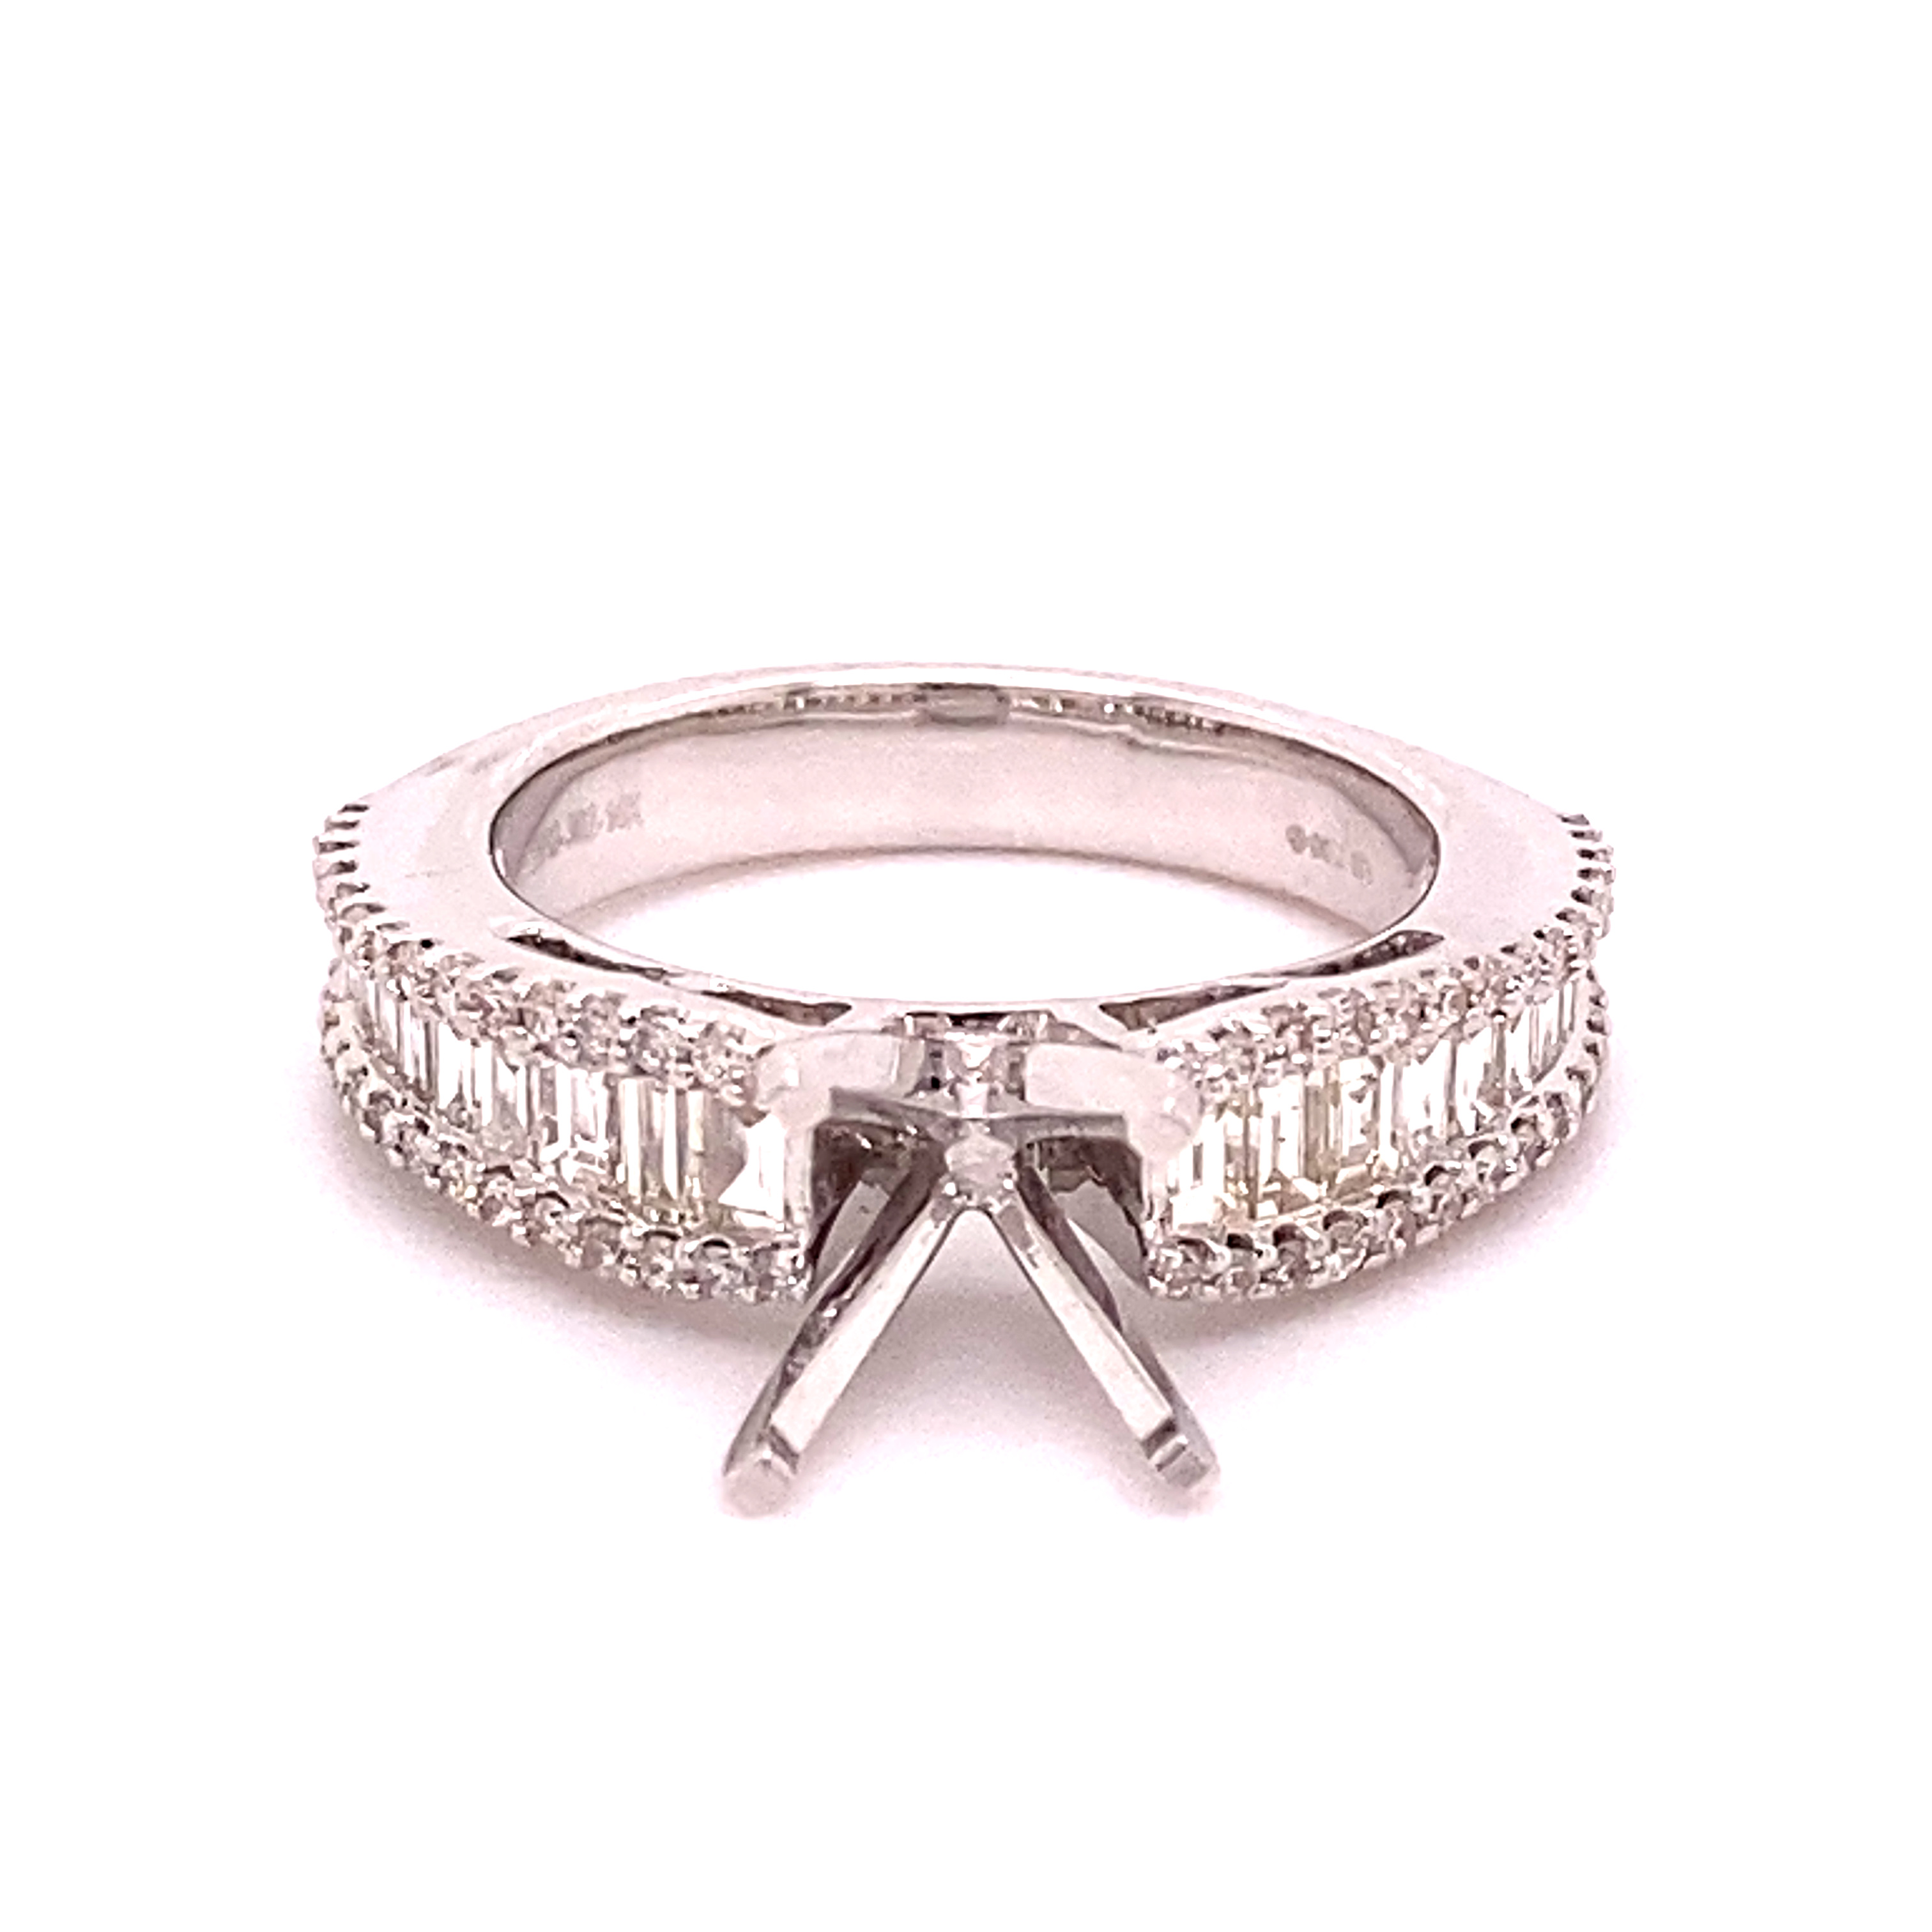 Diamond Semimount Ring in 14K White Gold